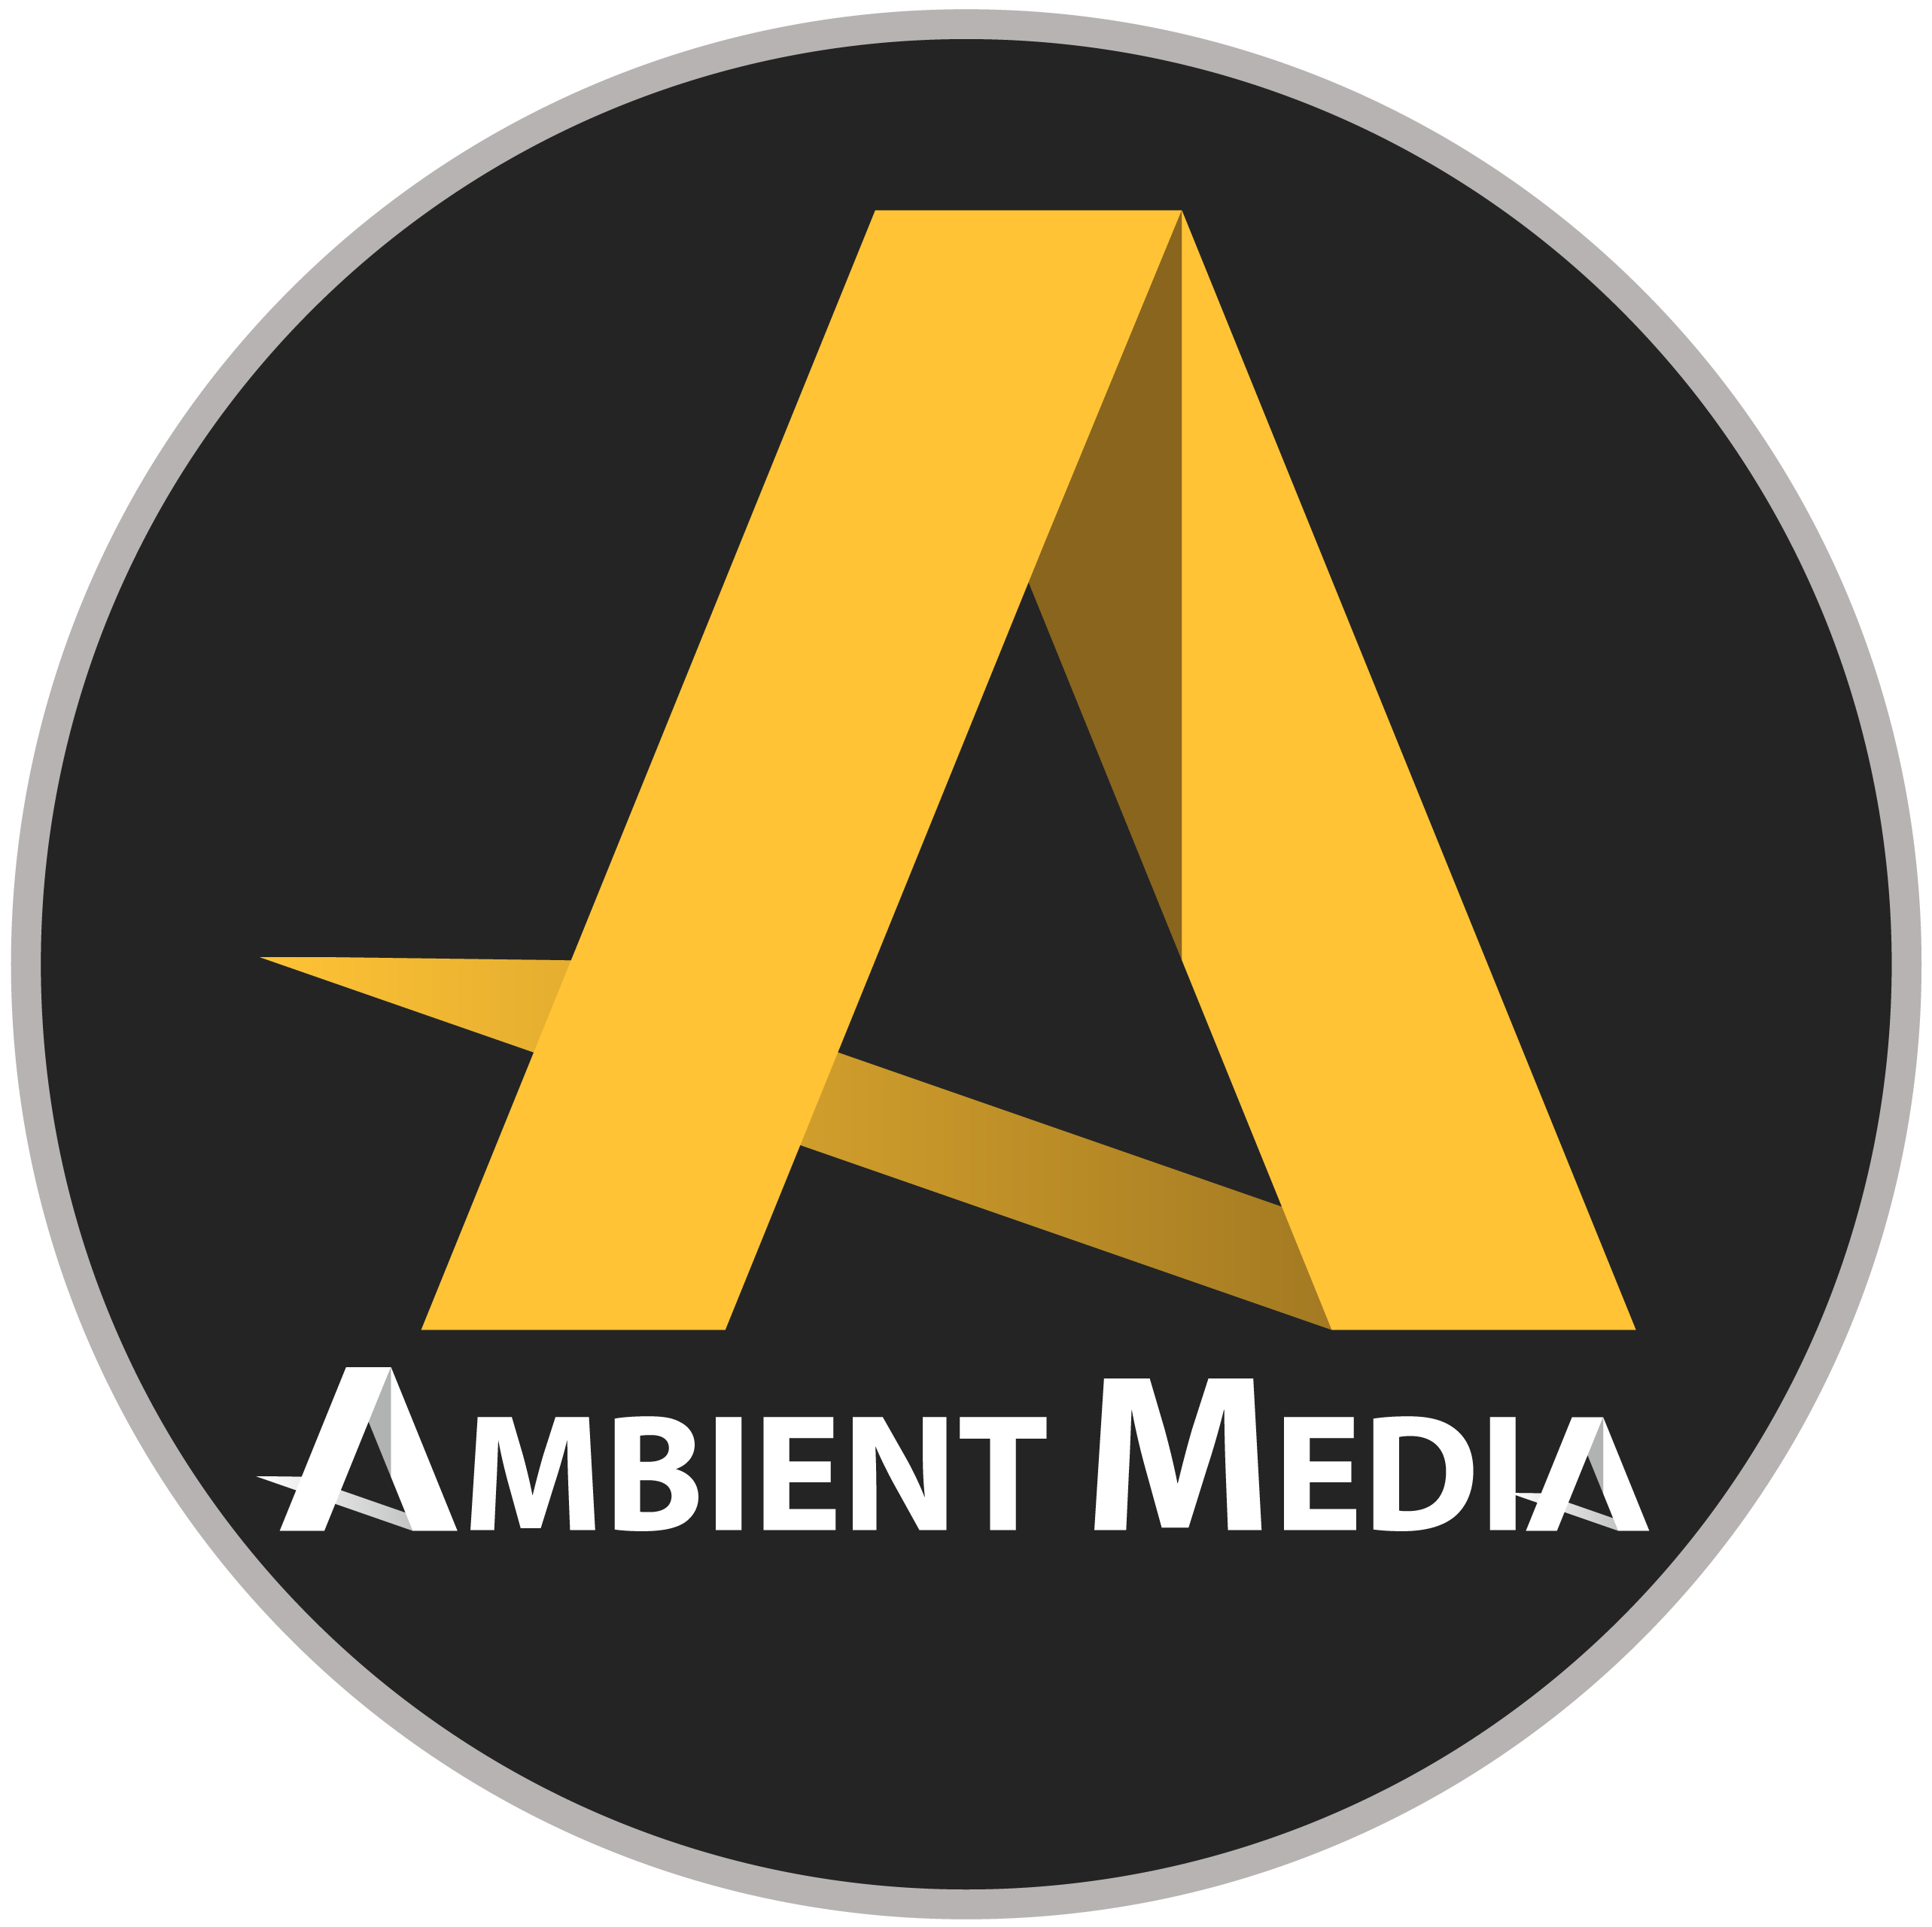 Ambient media logo